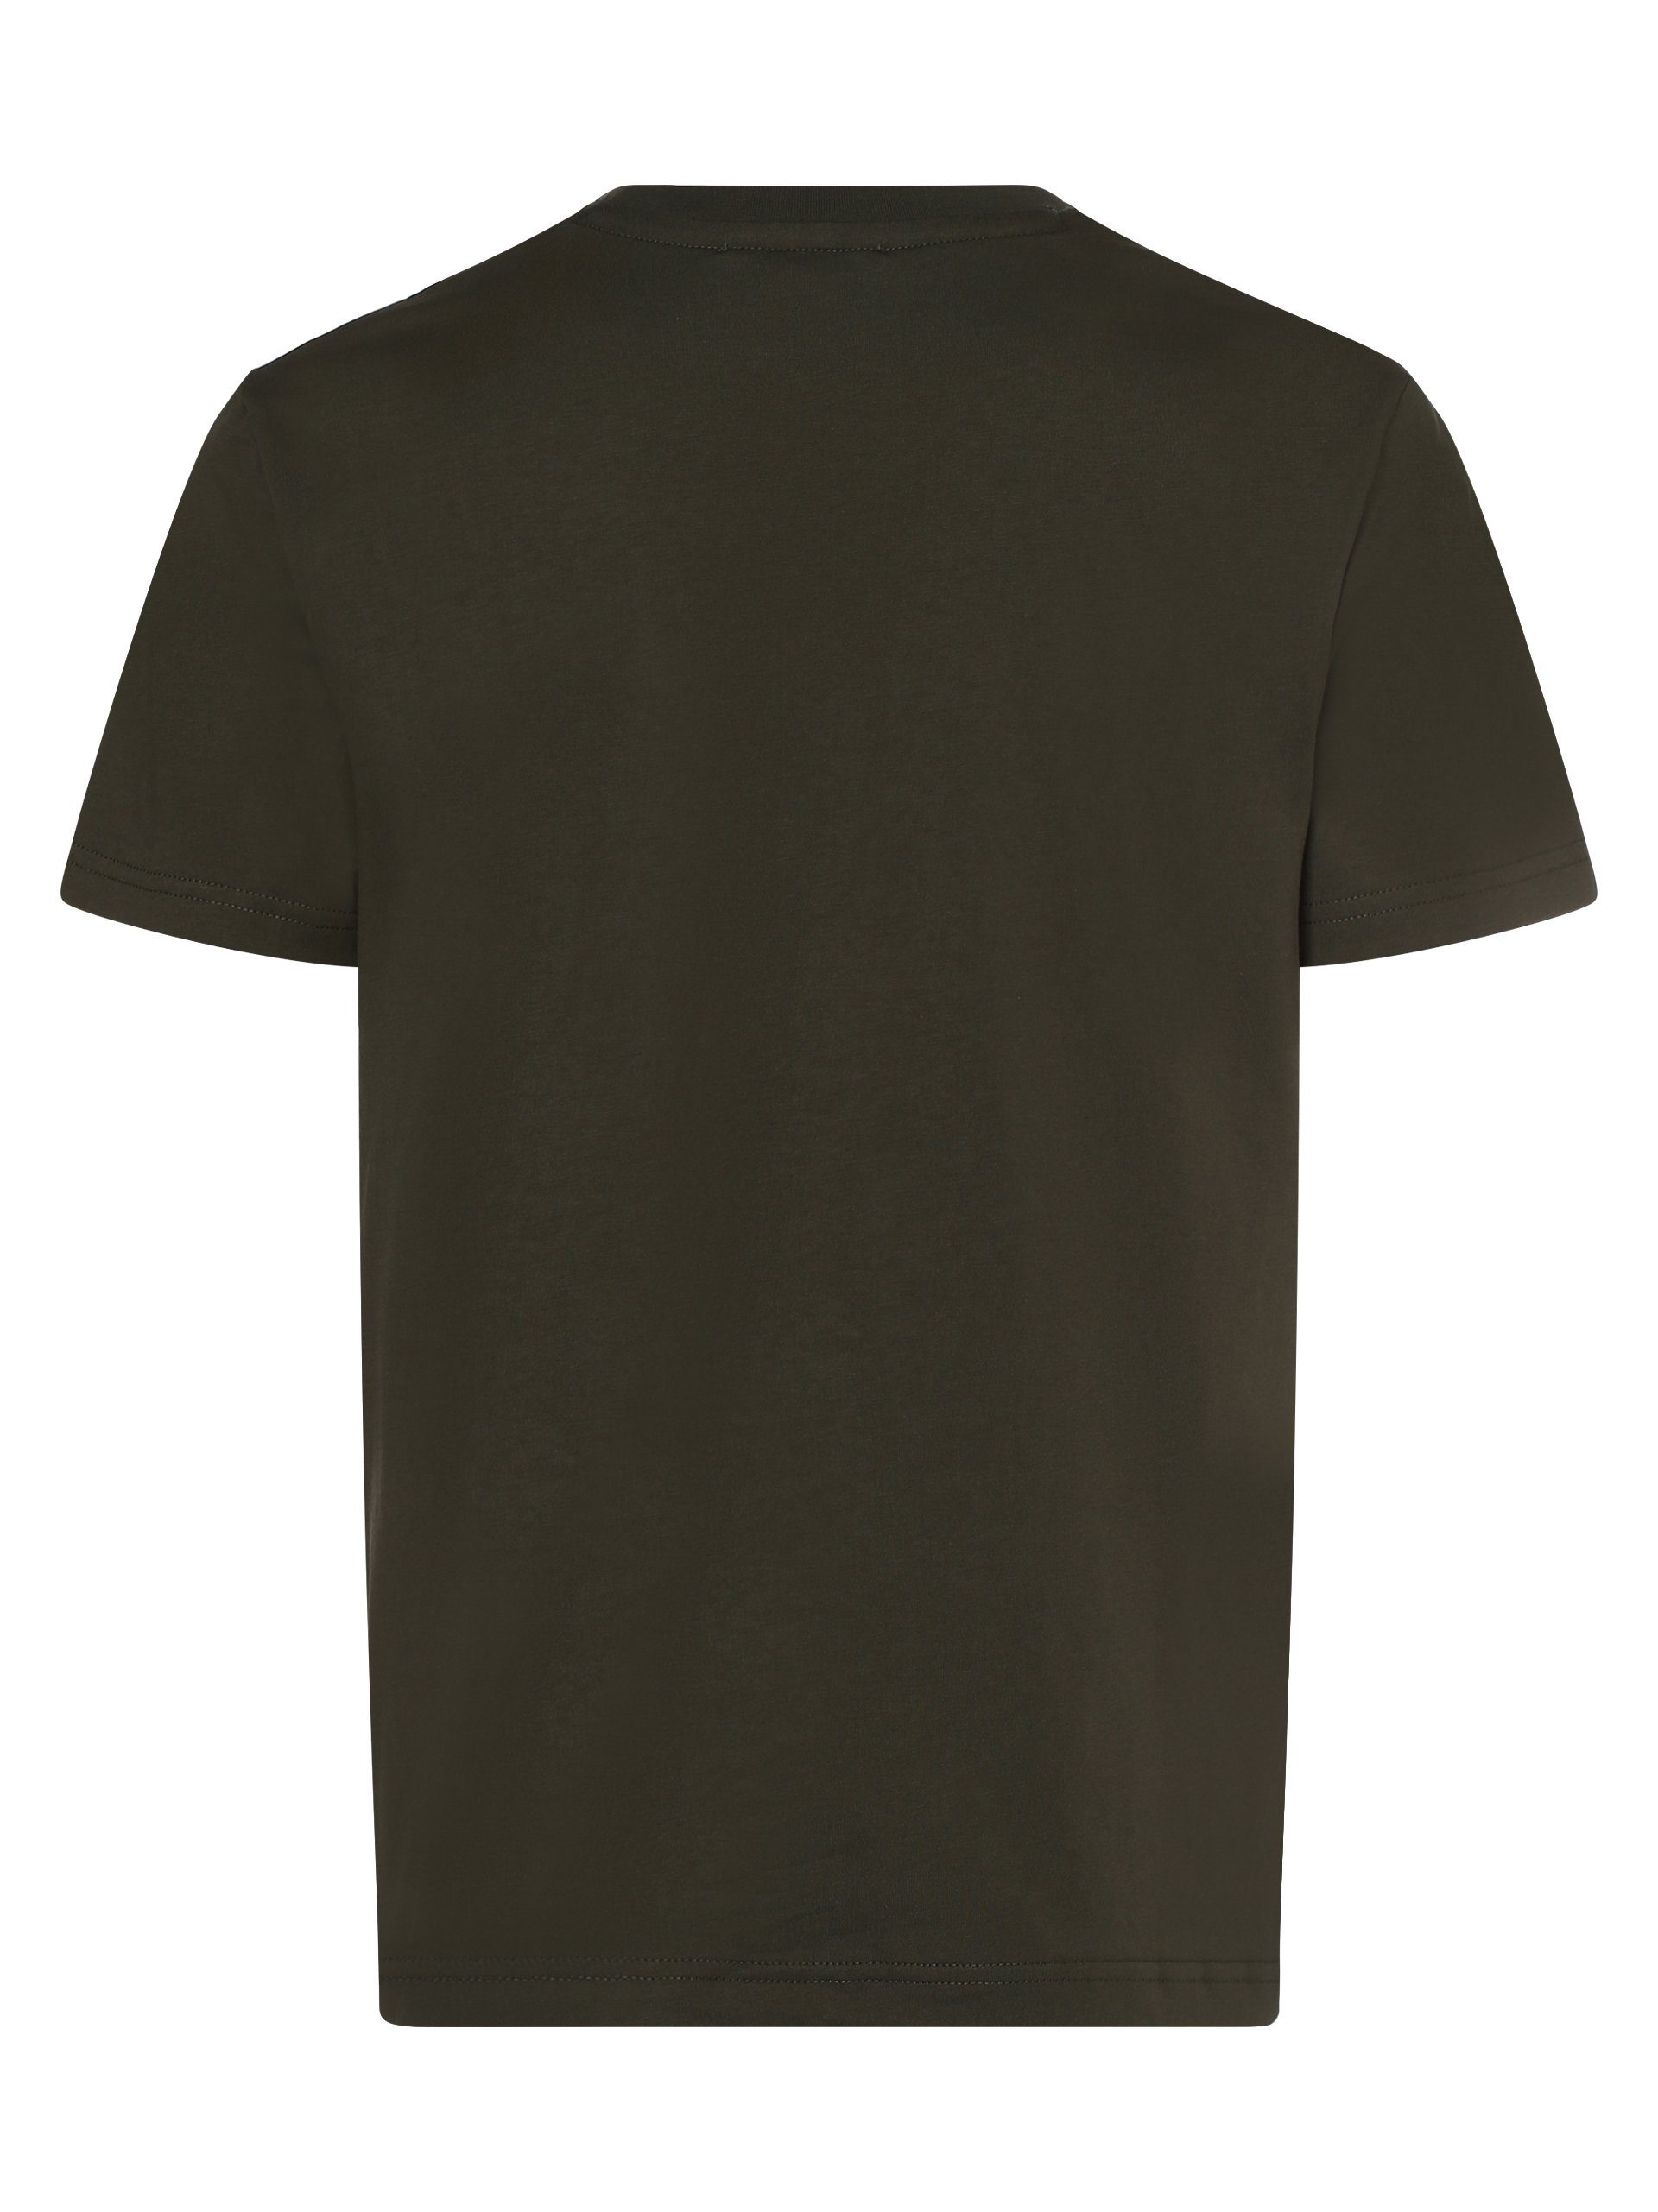 Versace Italia T-Shirt oliv by Italia 19V69 19V69 Sergio